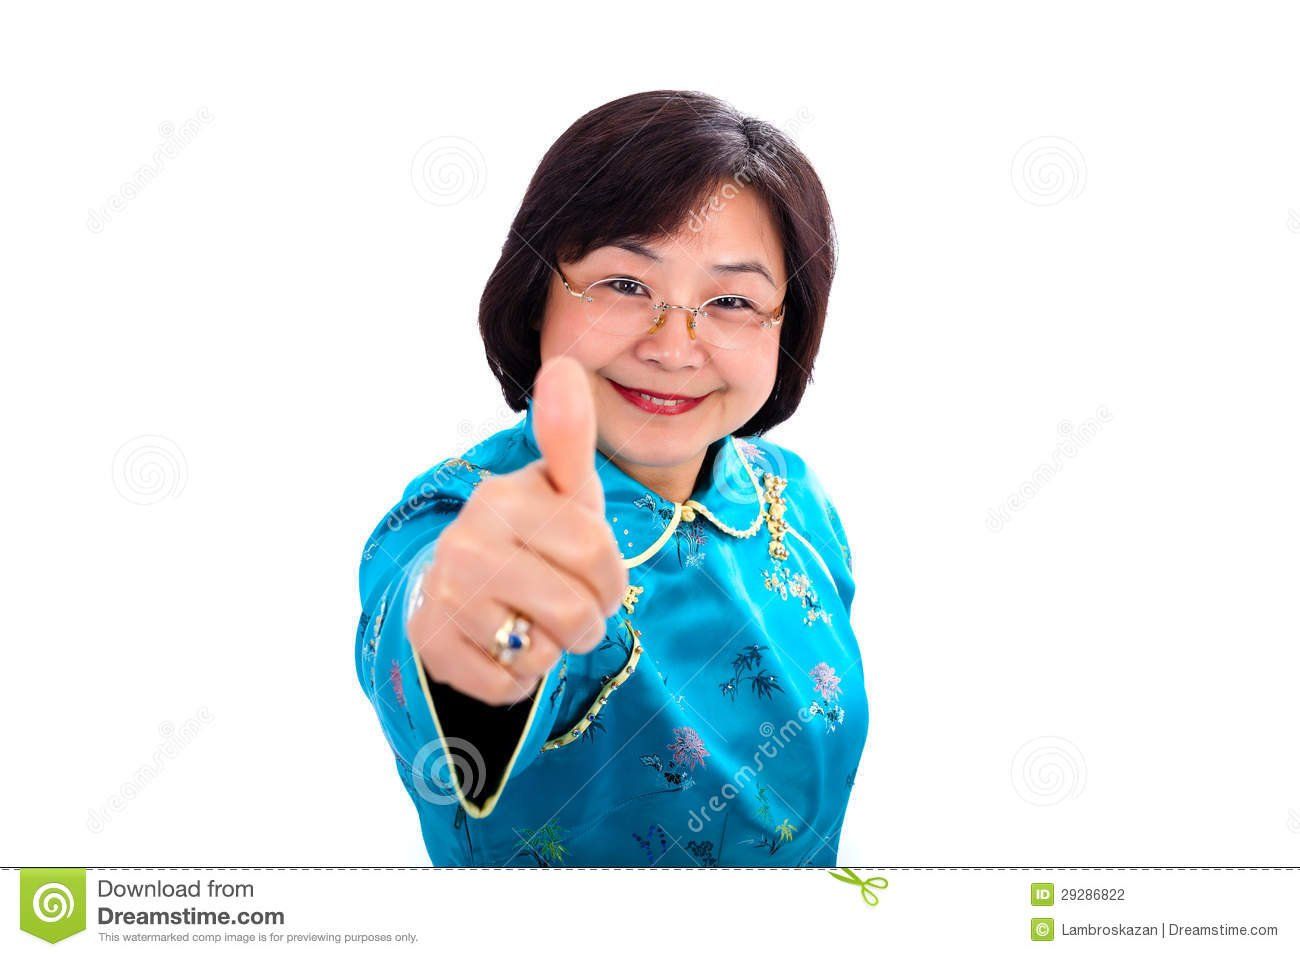 Asian ladies pics thumbs